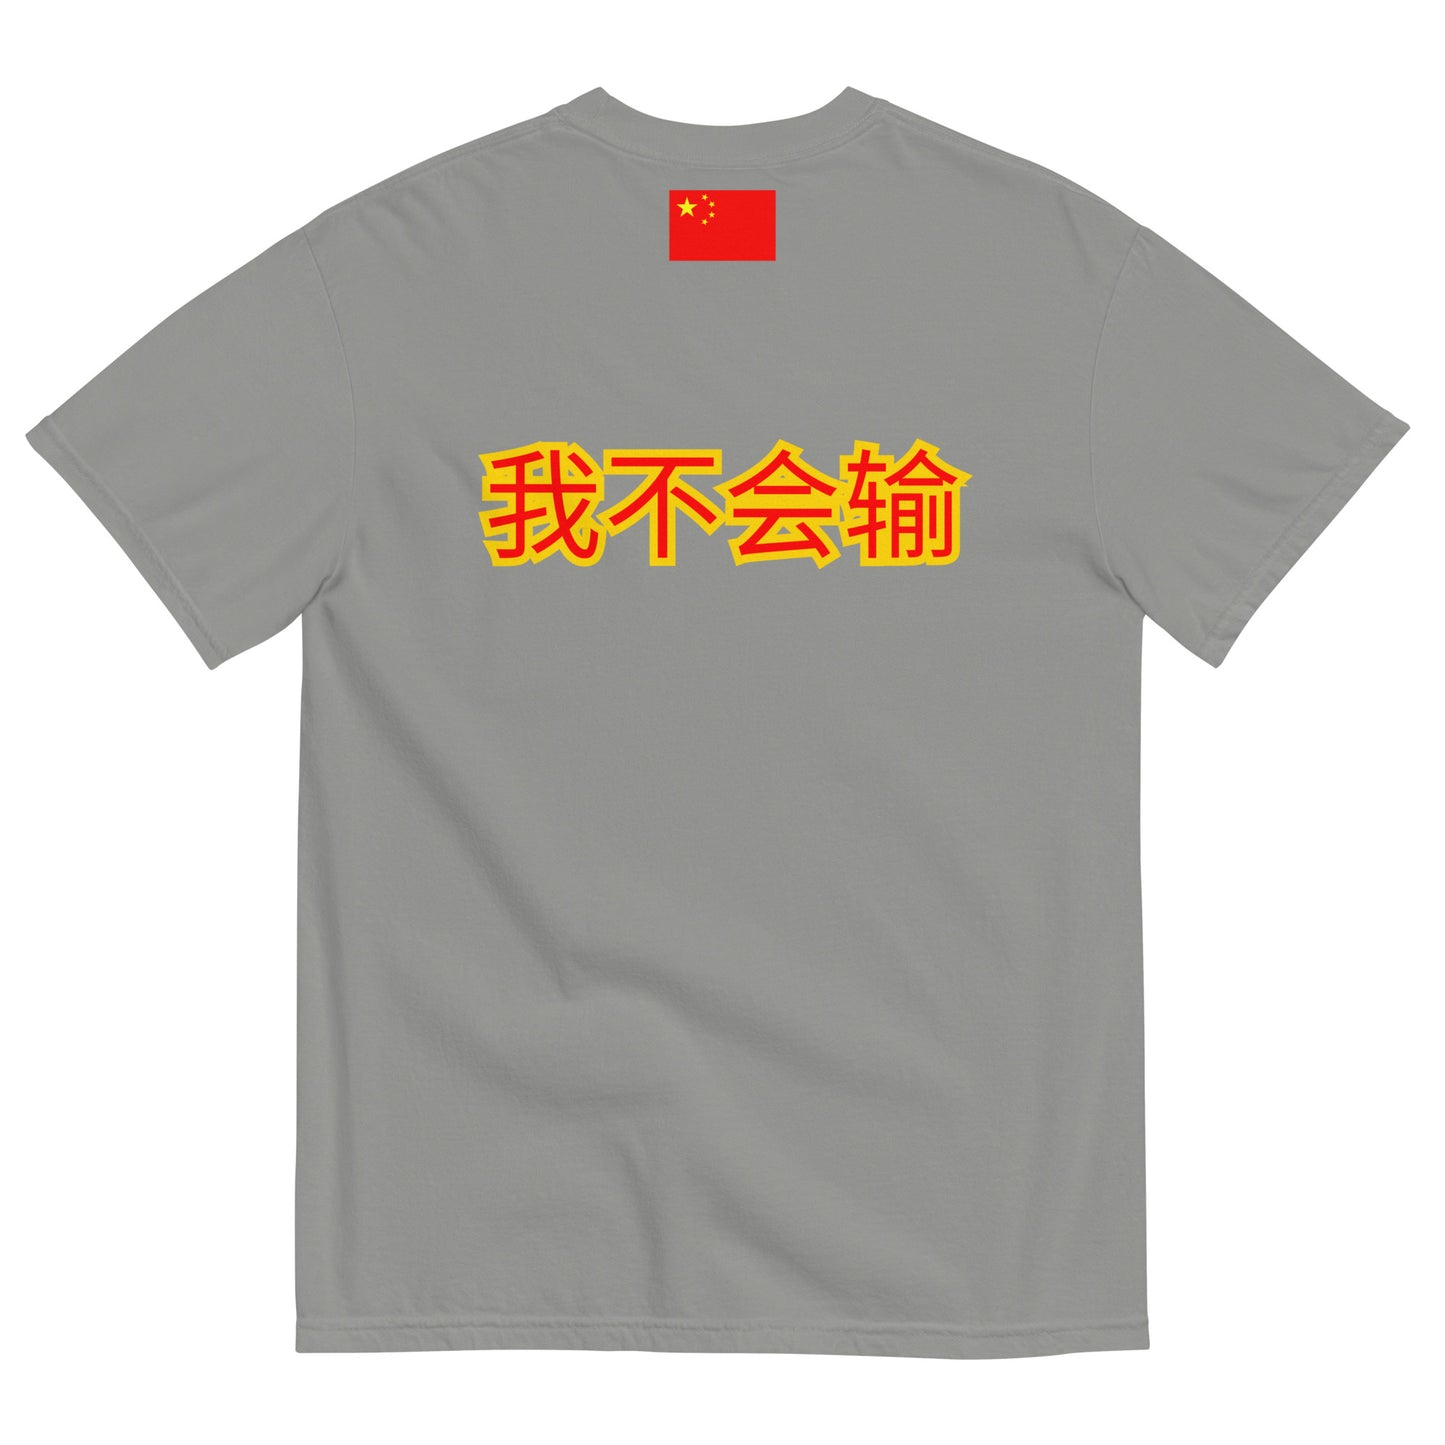 BigSmoke Soprano Clothing: BigSmoke Soprano Worldwide Collection: I Can Not Lose Tee (China Edition)